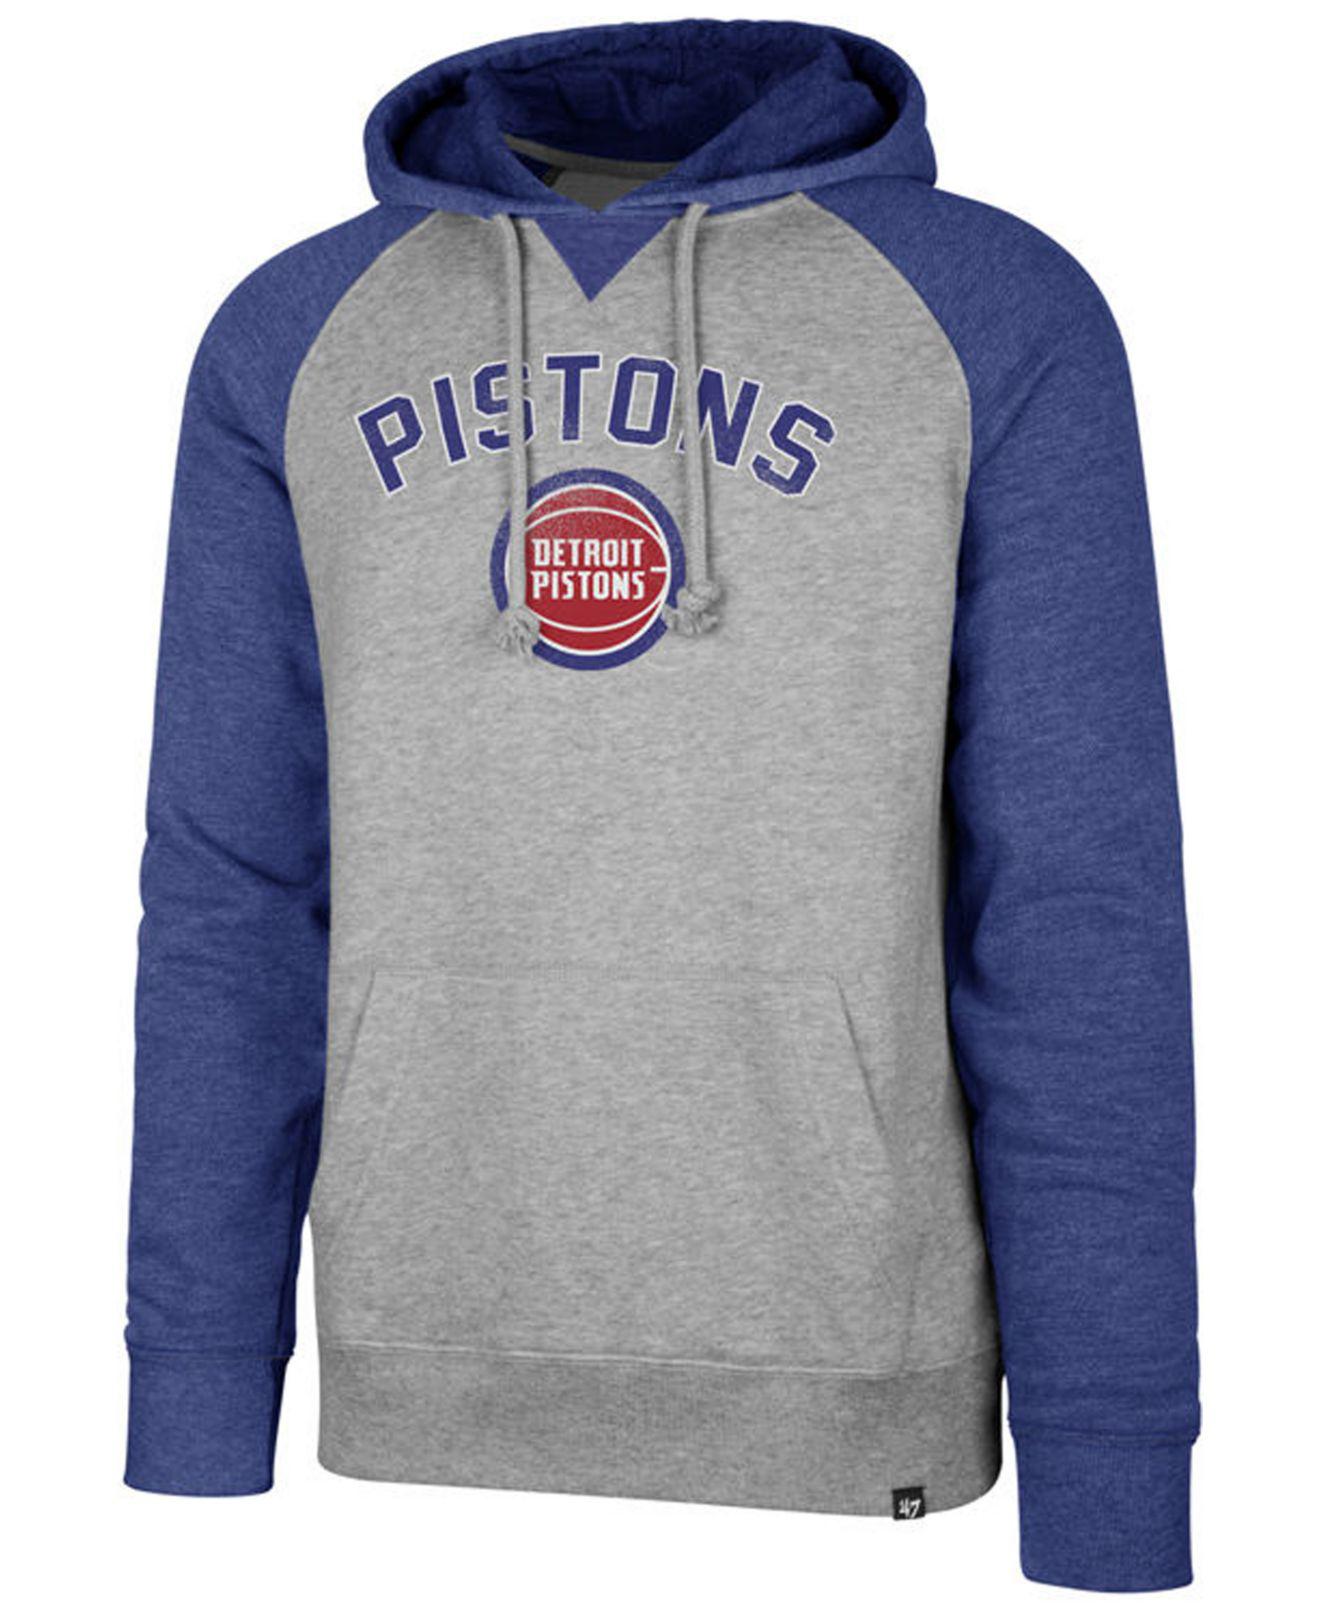 Lyst - 47 Brand Detroit Pistons Match Raglan Hoodie in Blue for Men